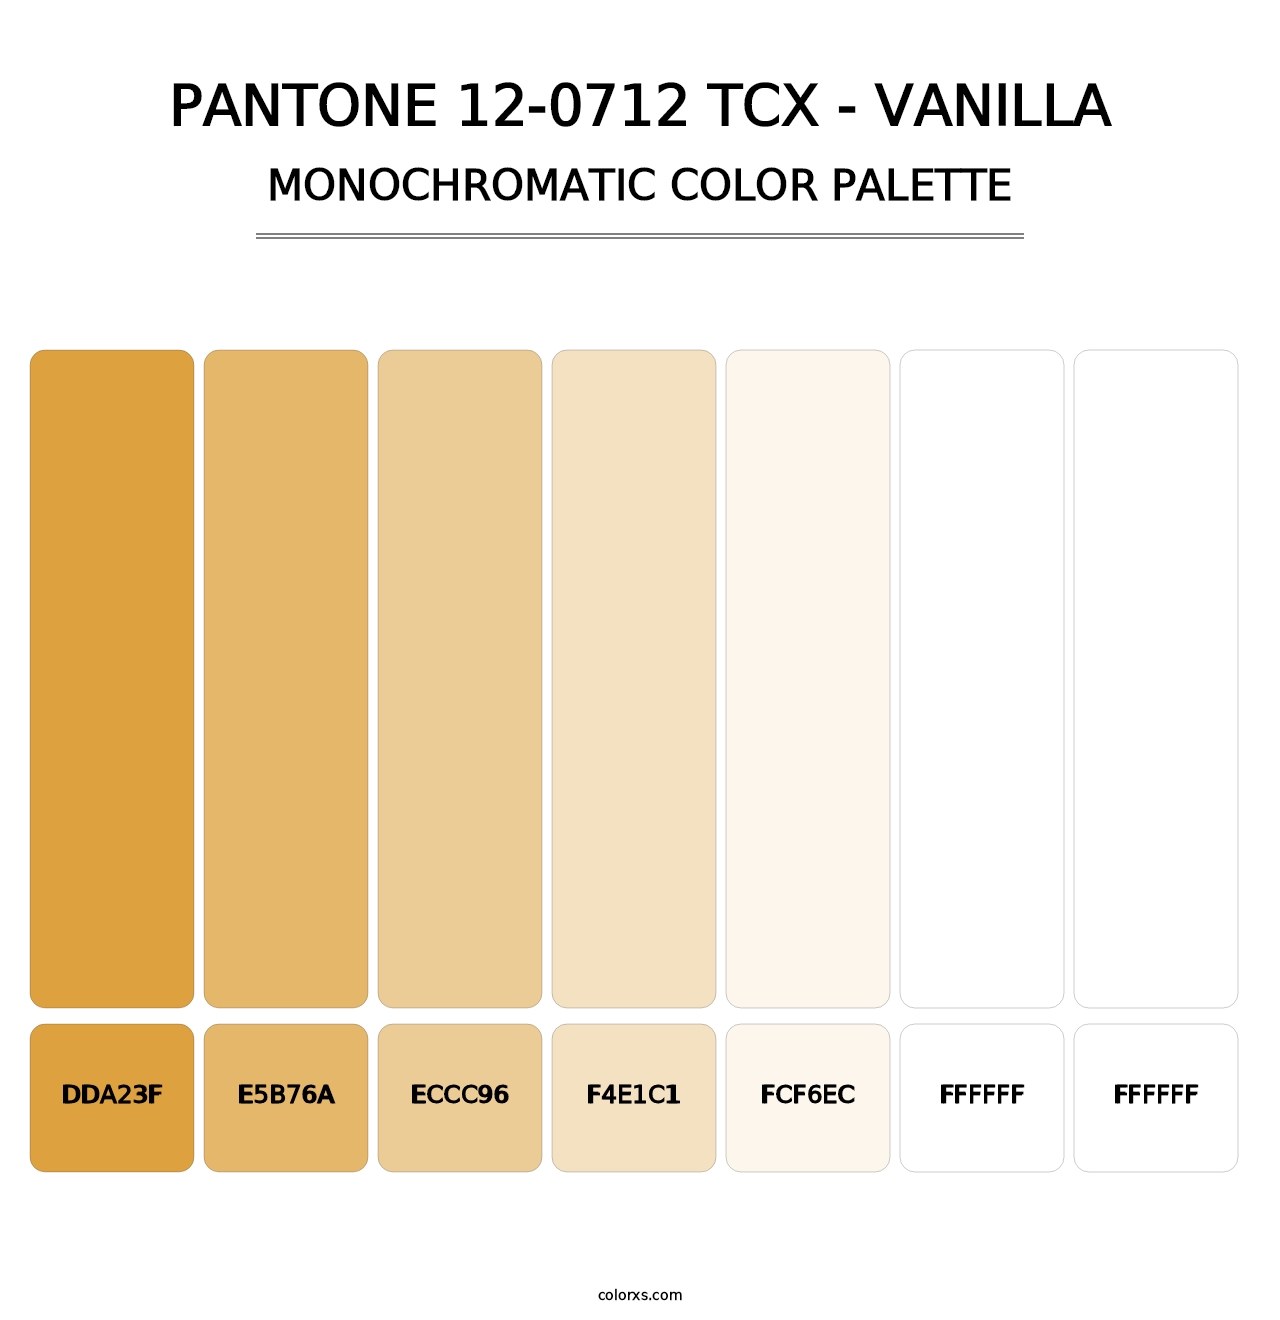 PANTONE 12-0712 TCX - Vanilla - Monochromatic Color Palette